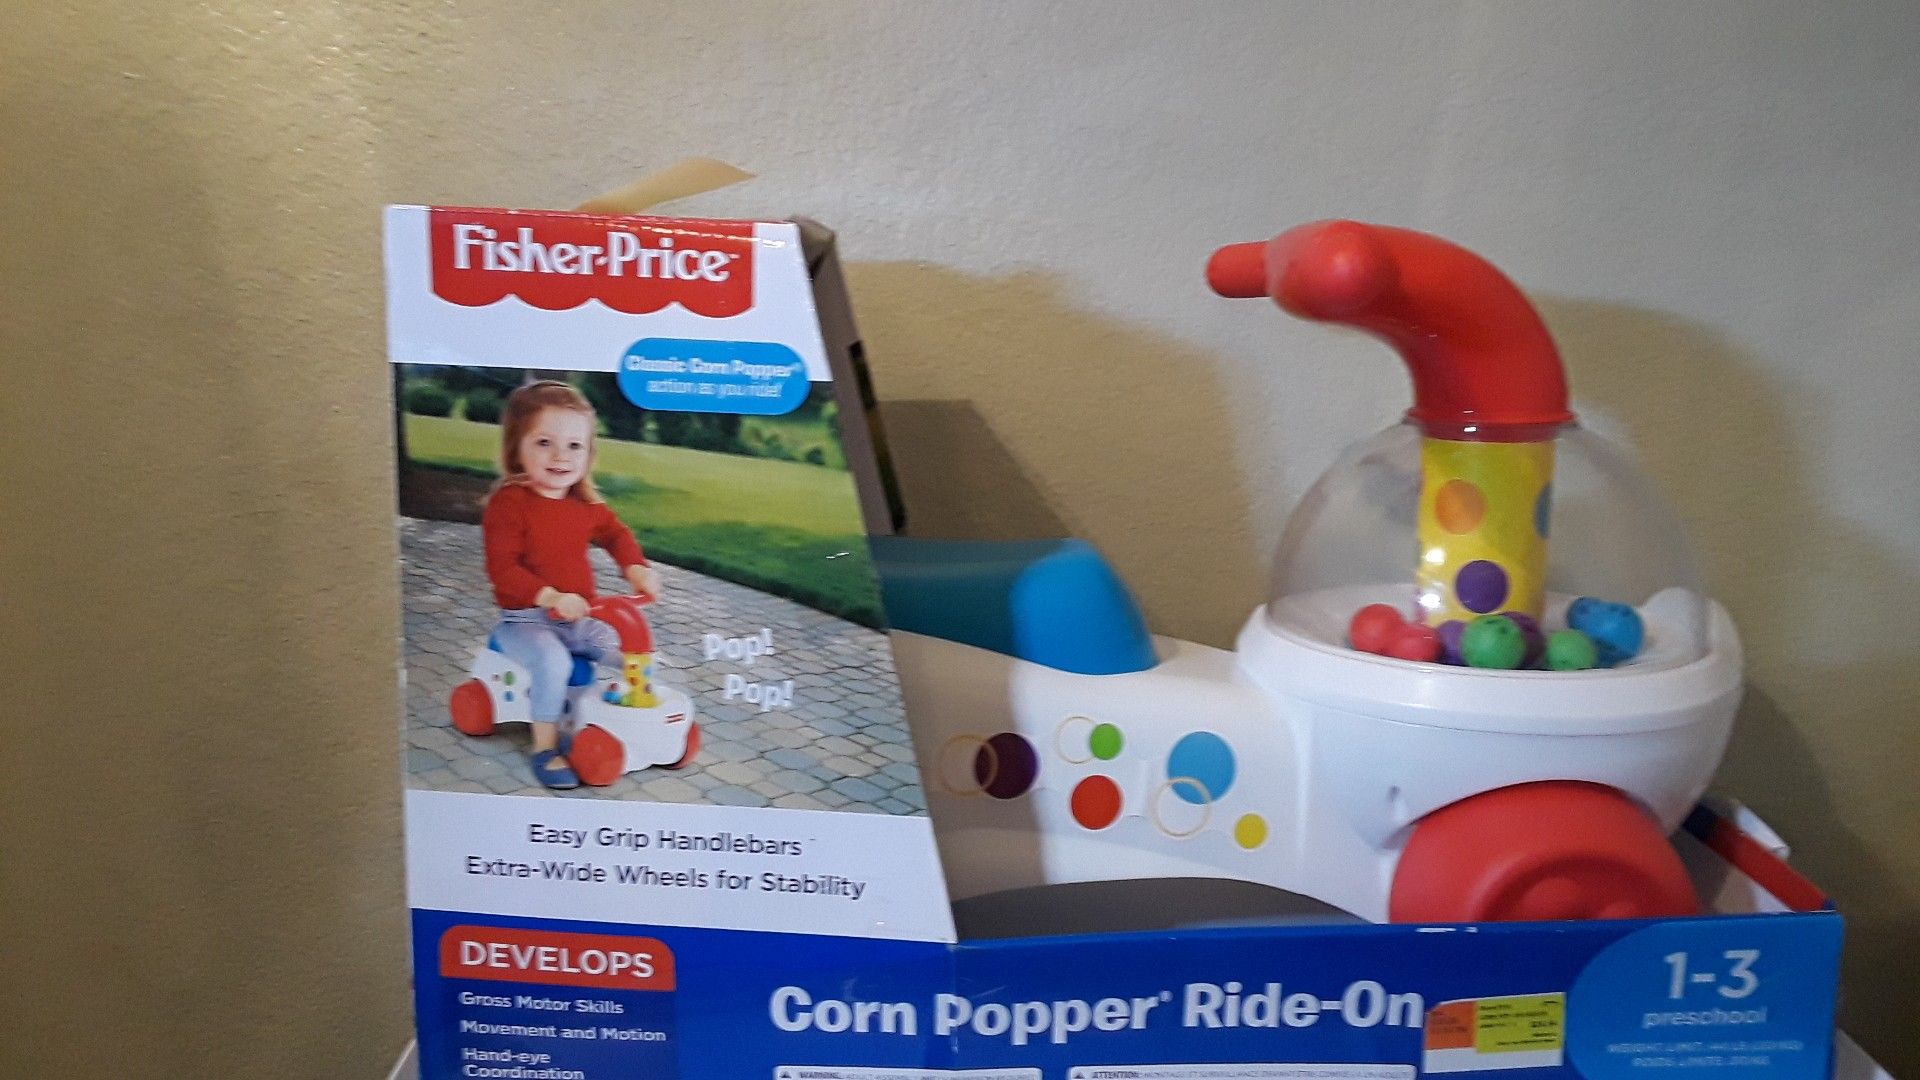 Fisher-Price Classic Corn Popper Ride On